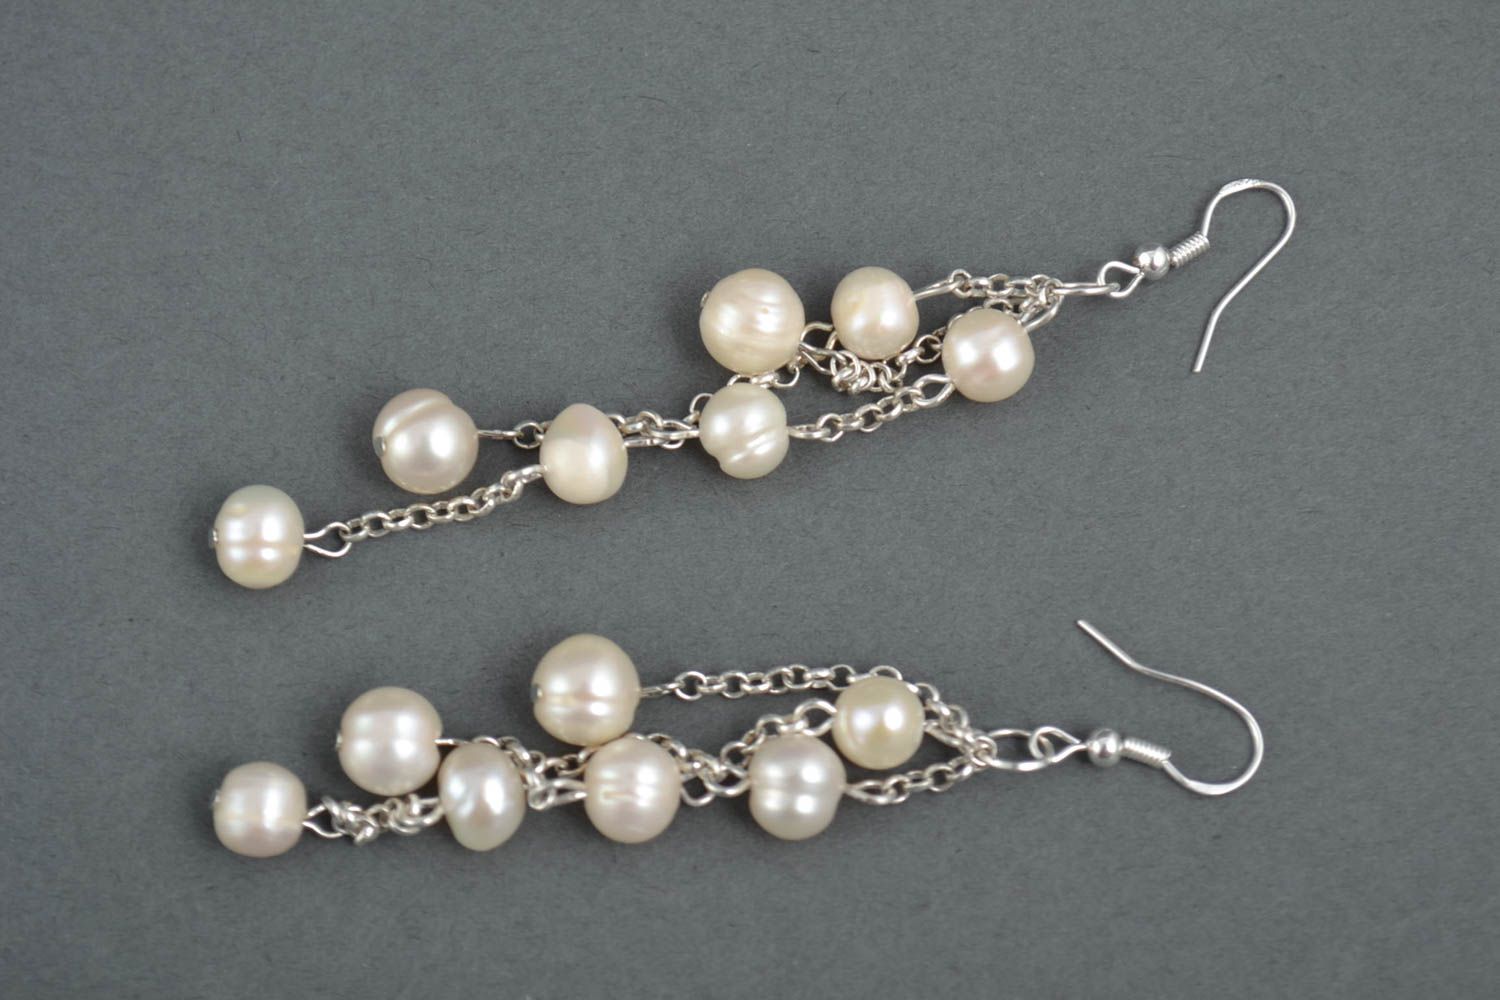 Dangling earrings handmade pearl jewelry long earrings fashion accessories photo 2